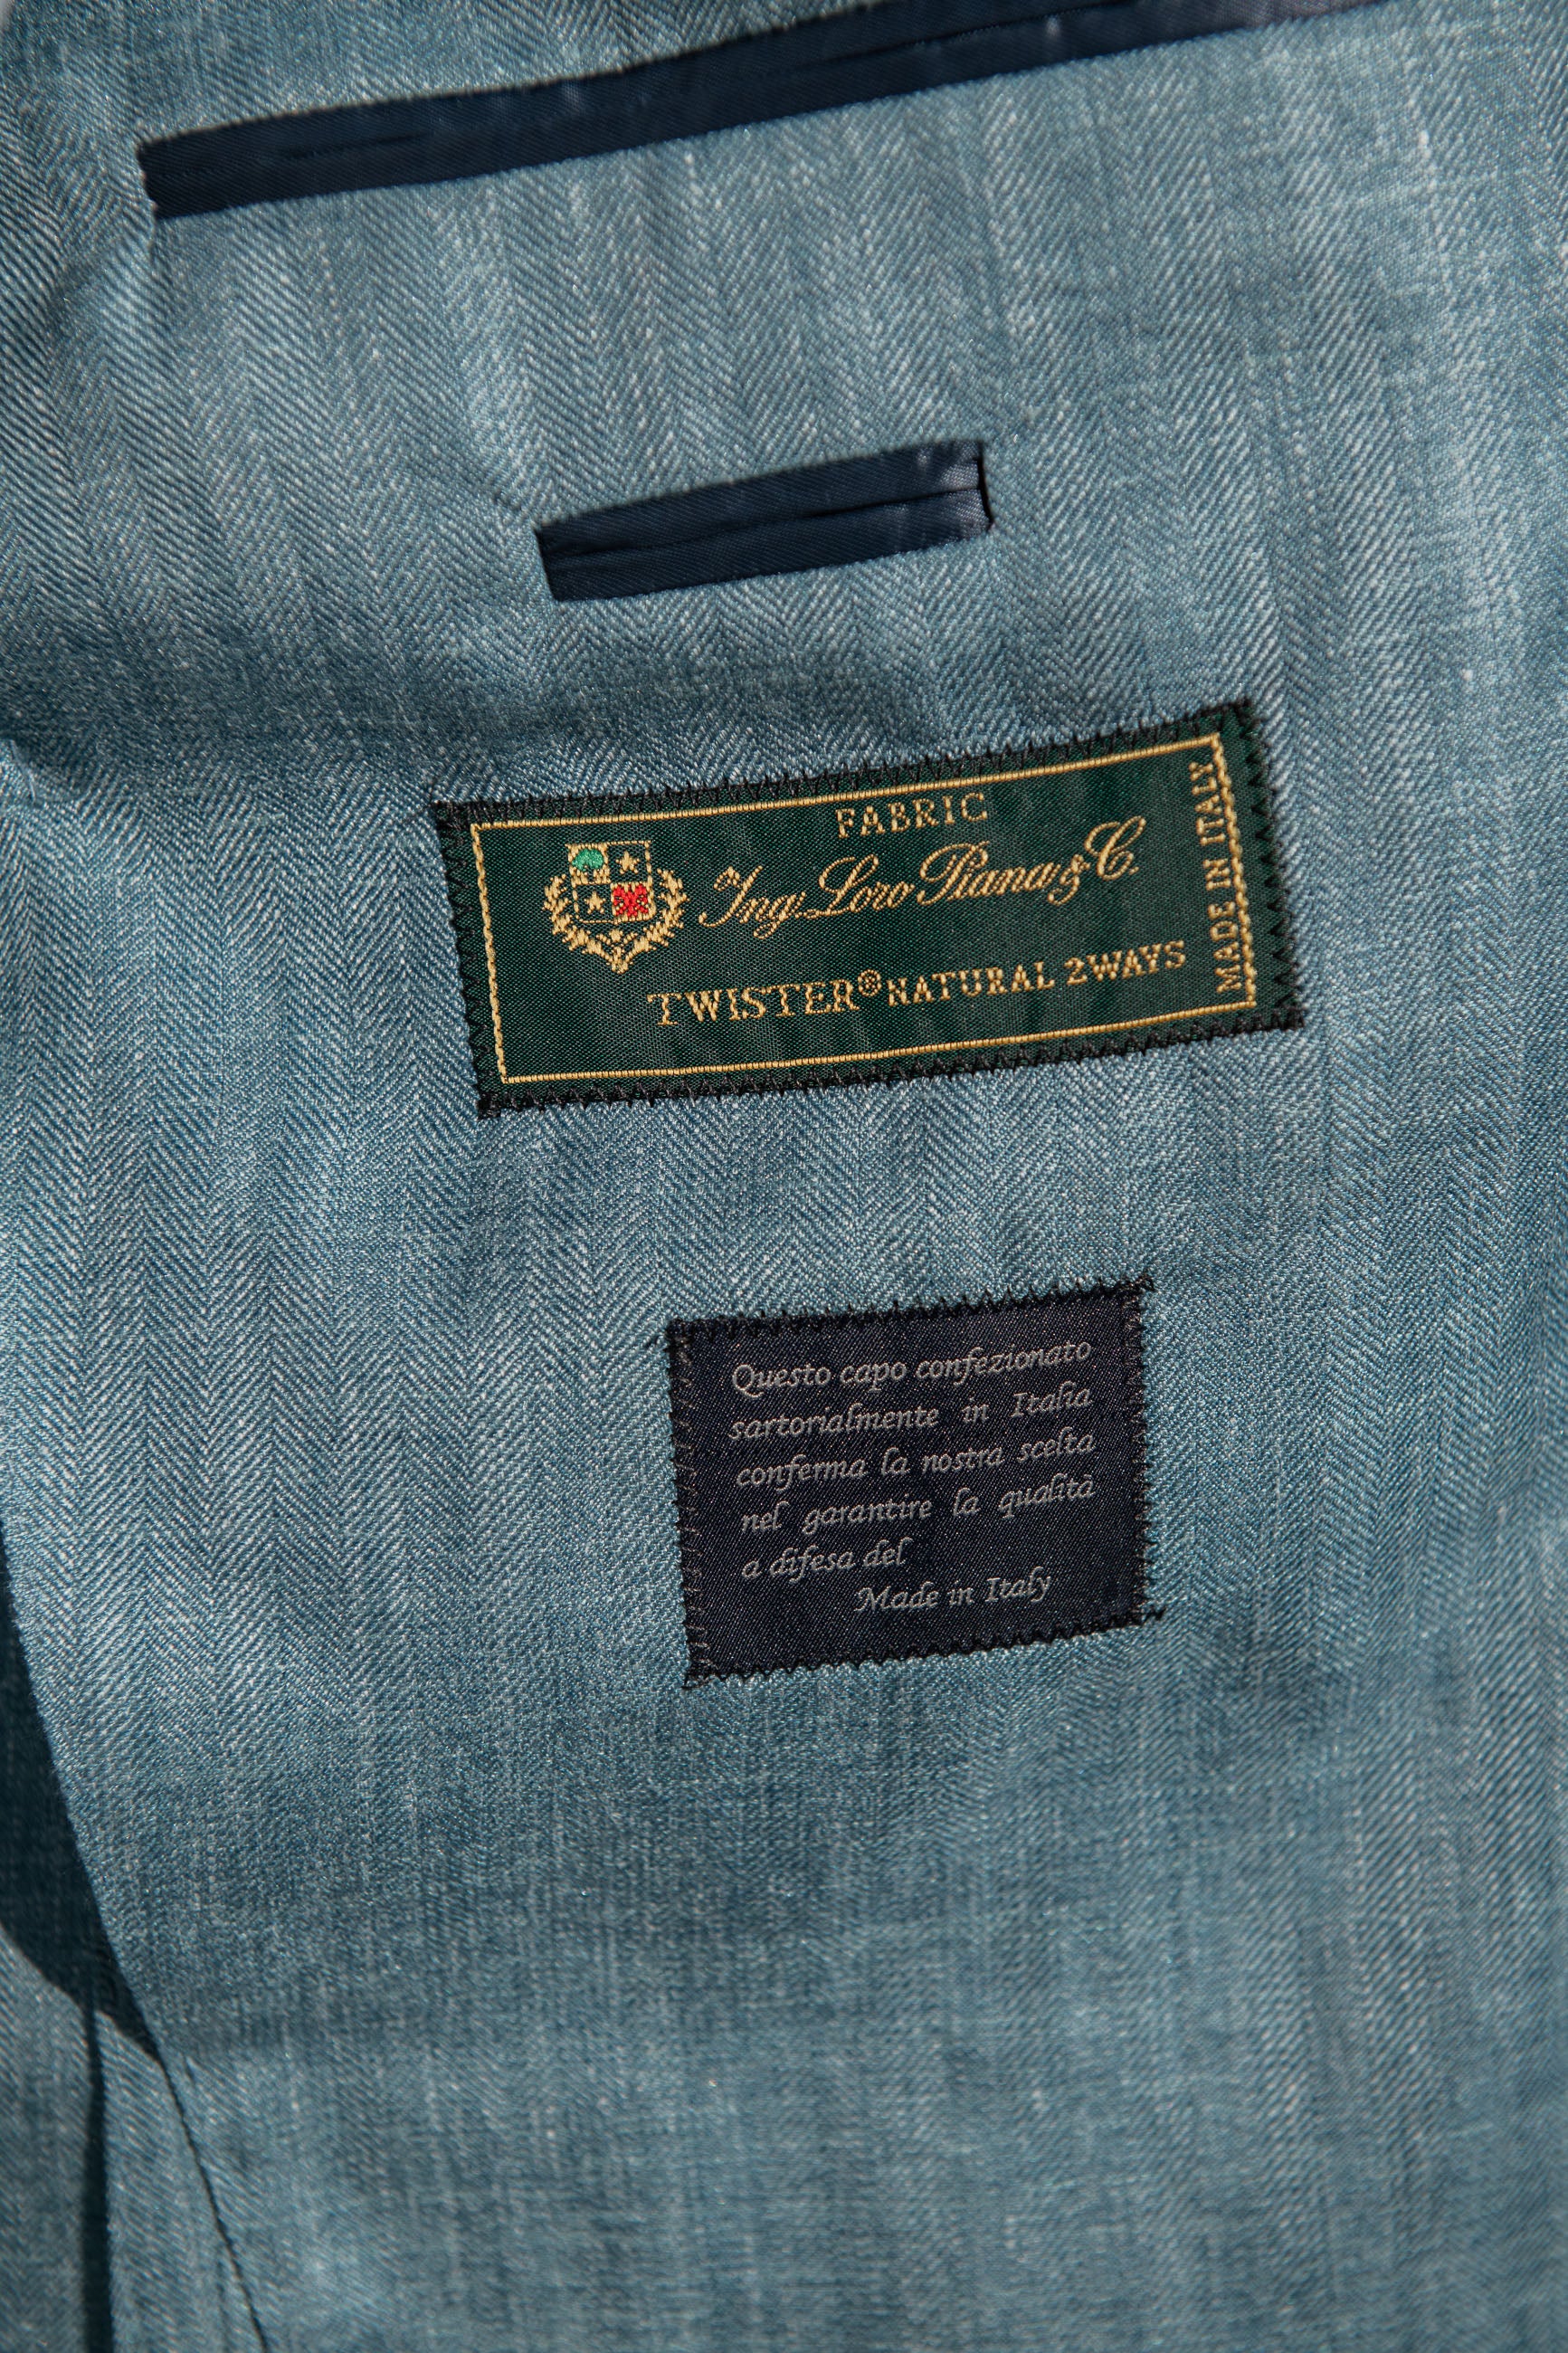 Water green Safari Jacket in Loro Piana wool silk and linen – Made in Italy